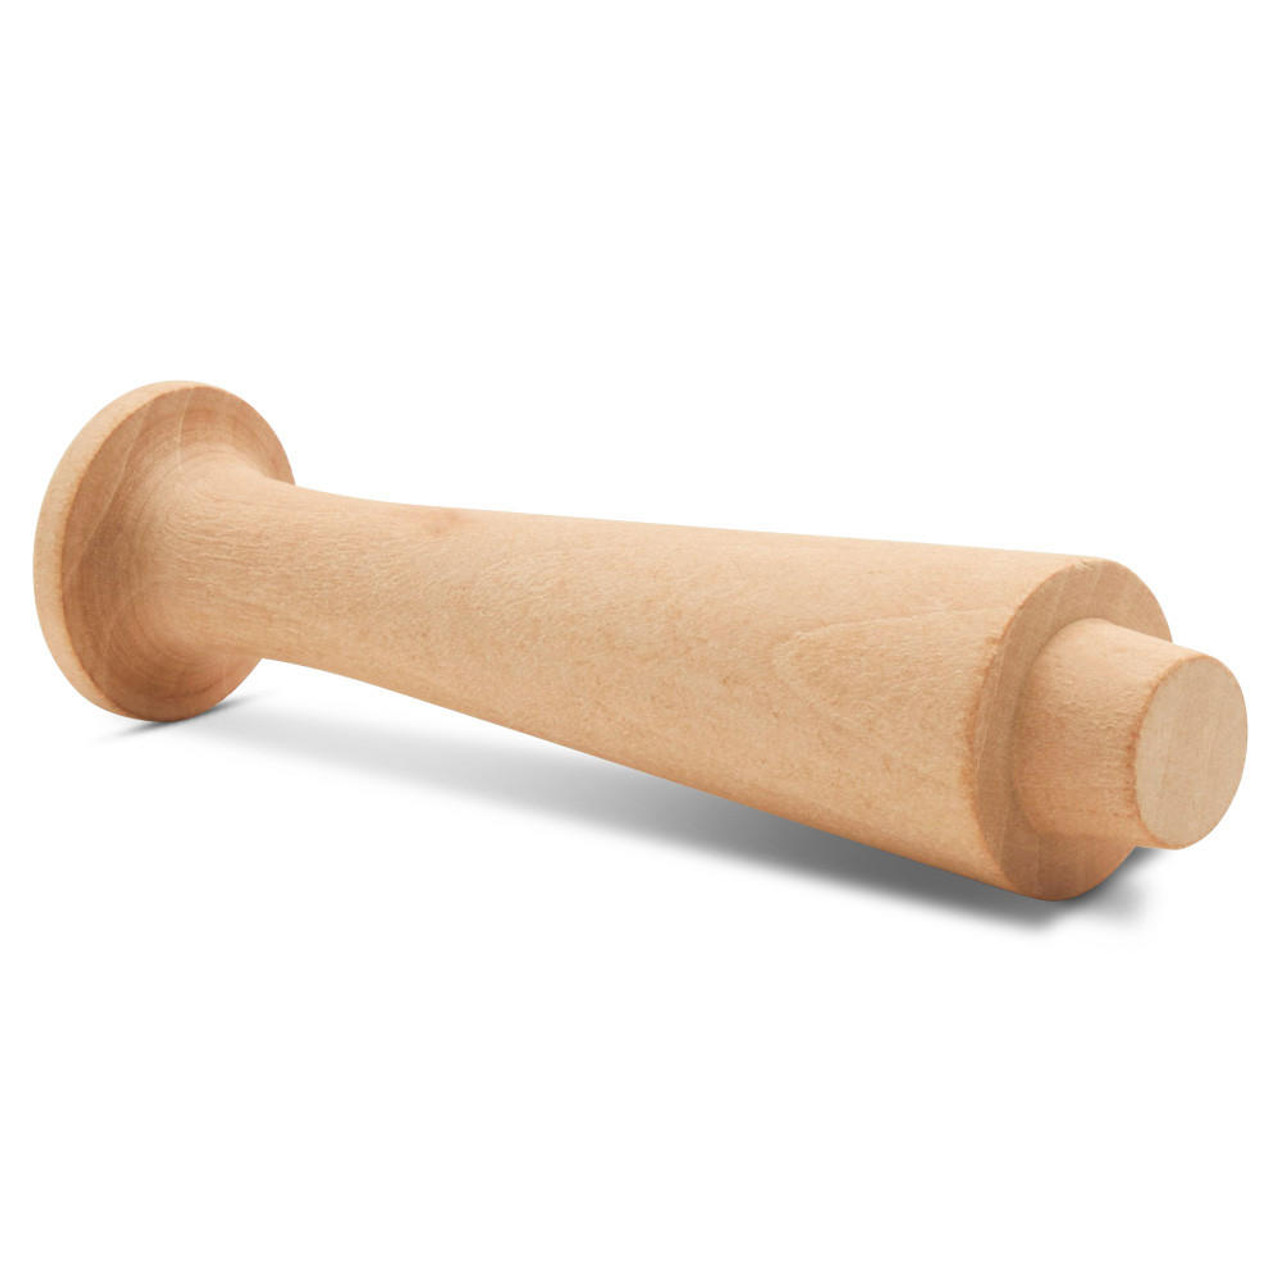 Jumbo Wooden Shaker Pegs 5 inch